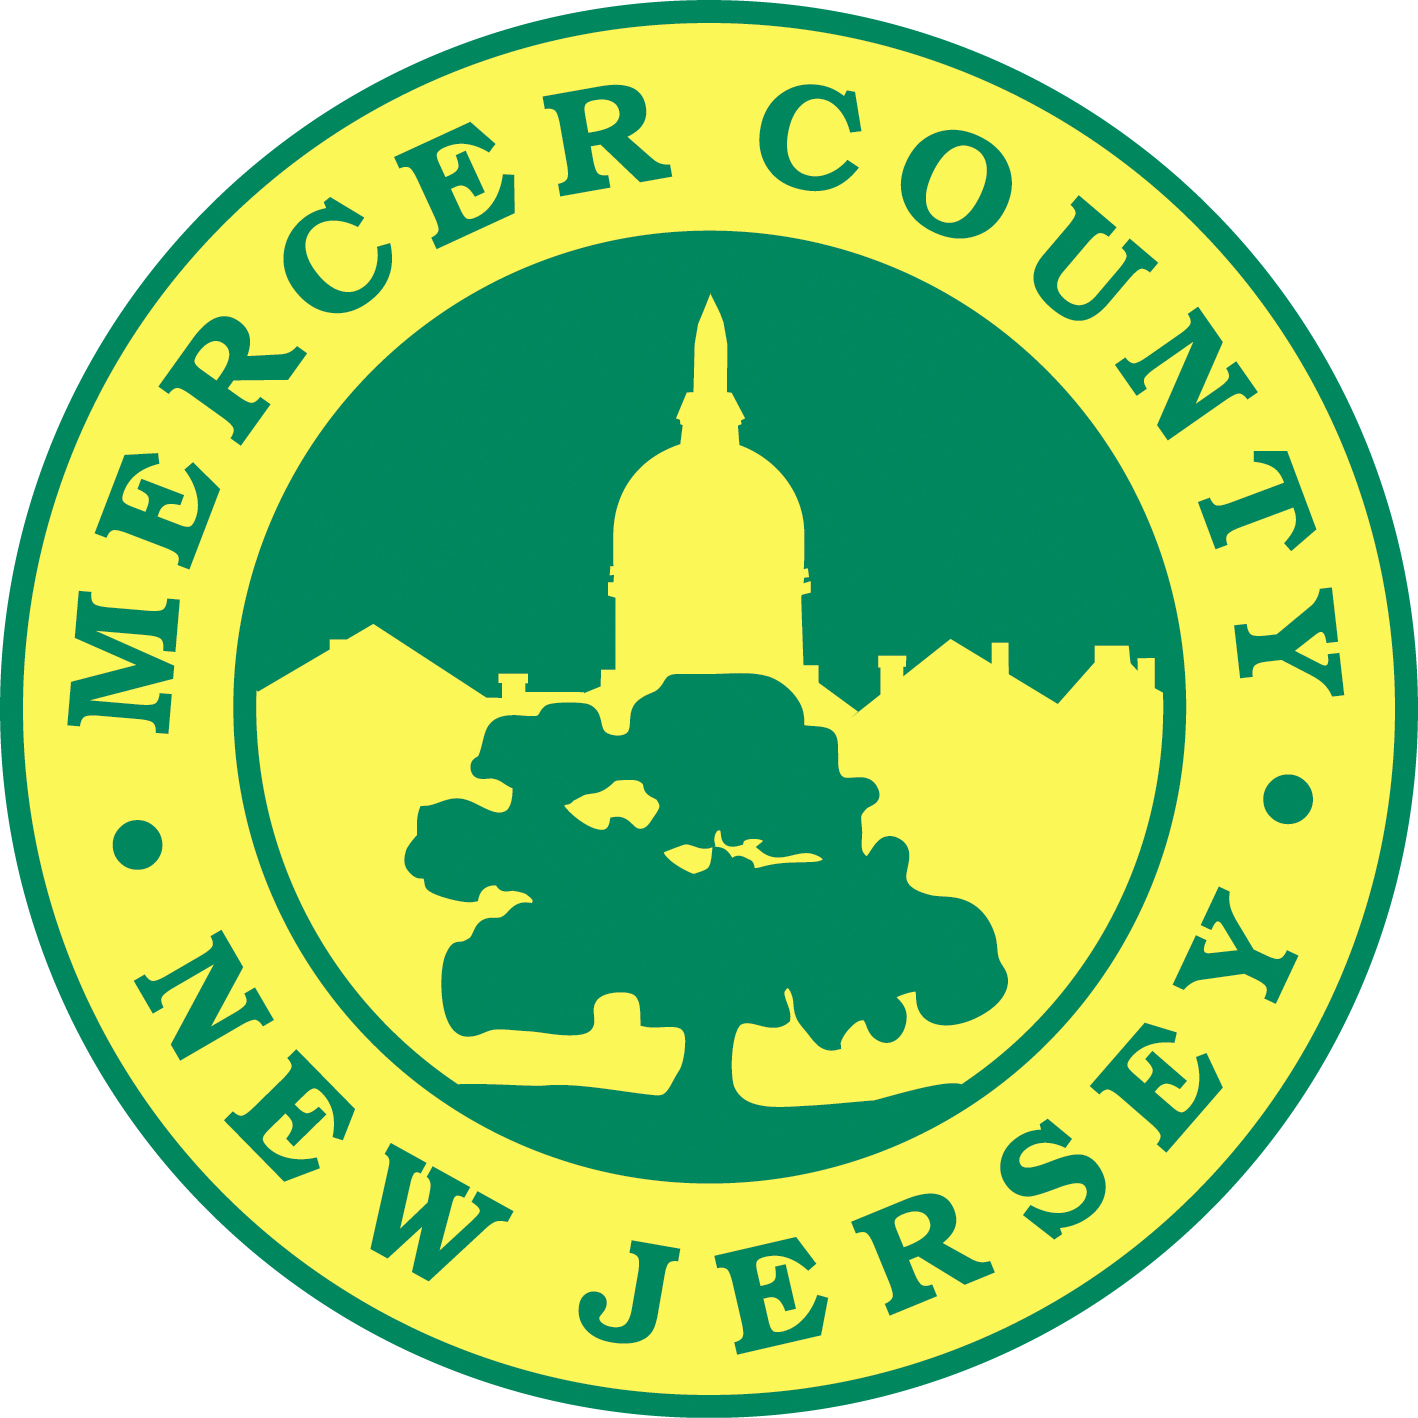 Organization logo of Mercer County